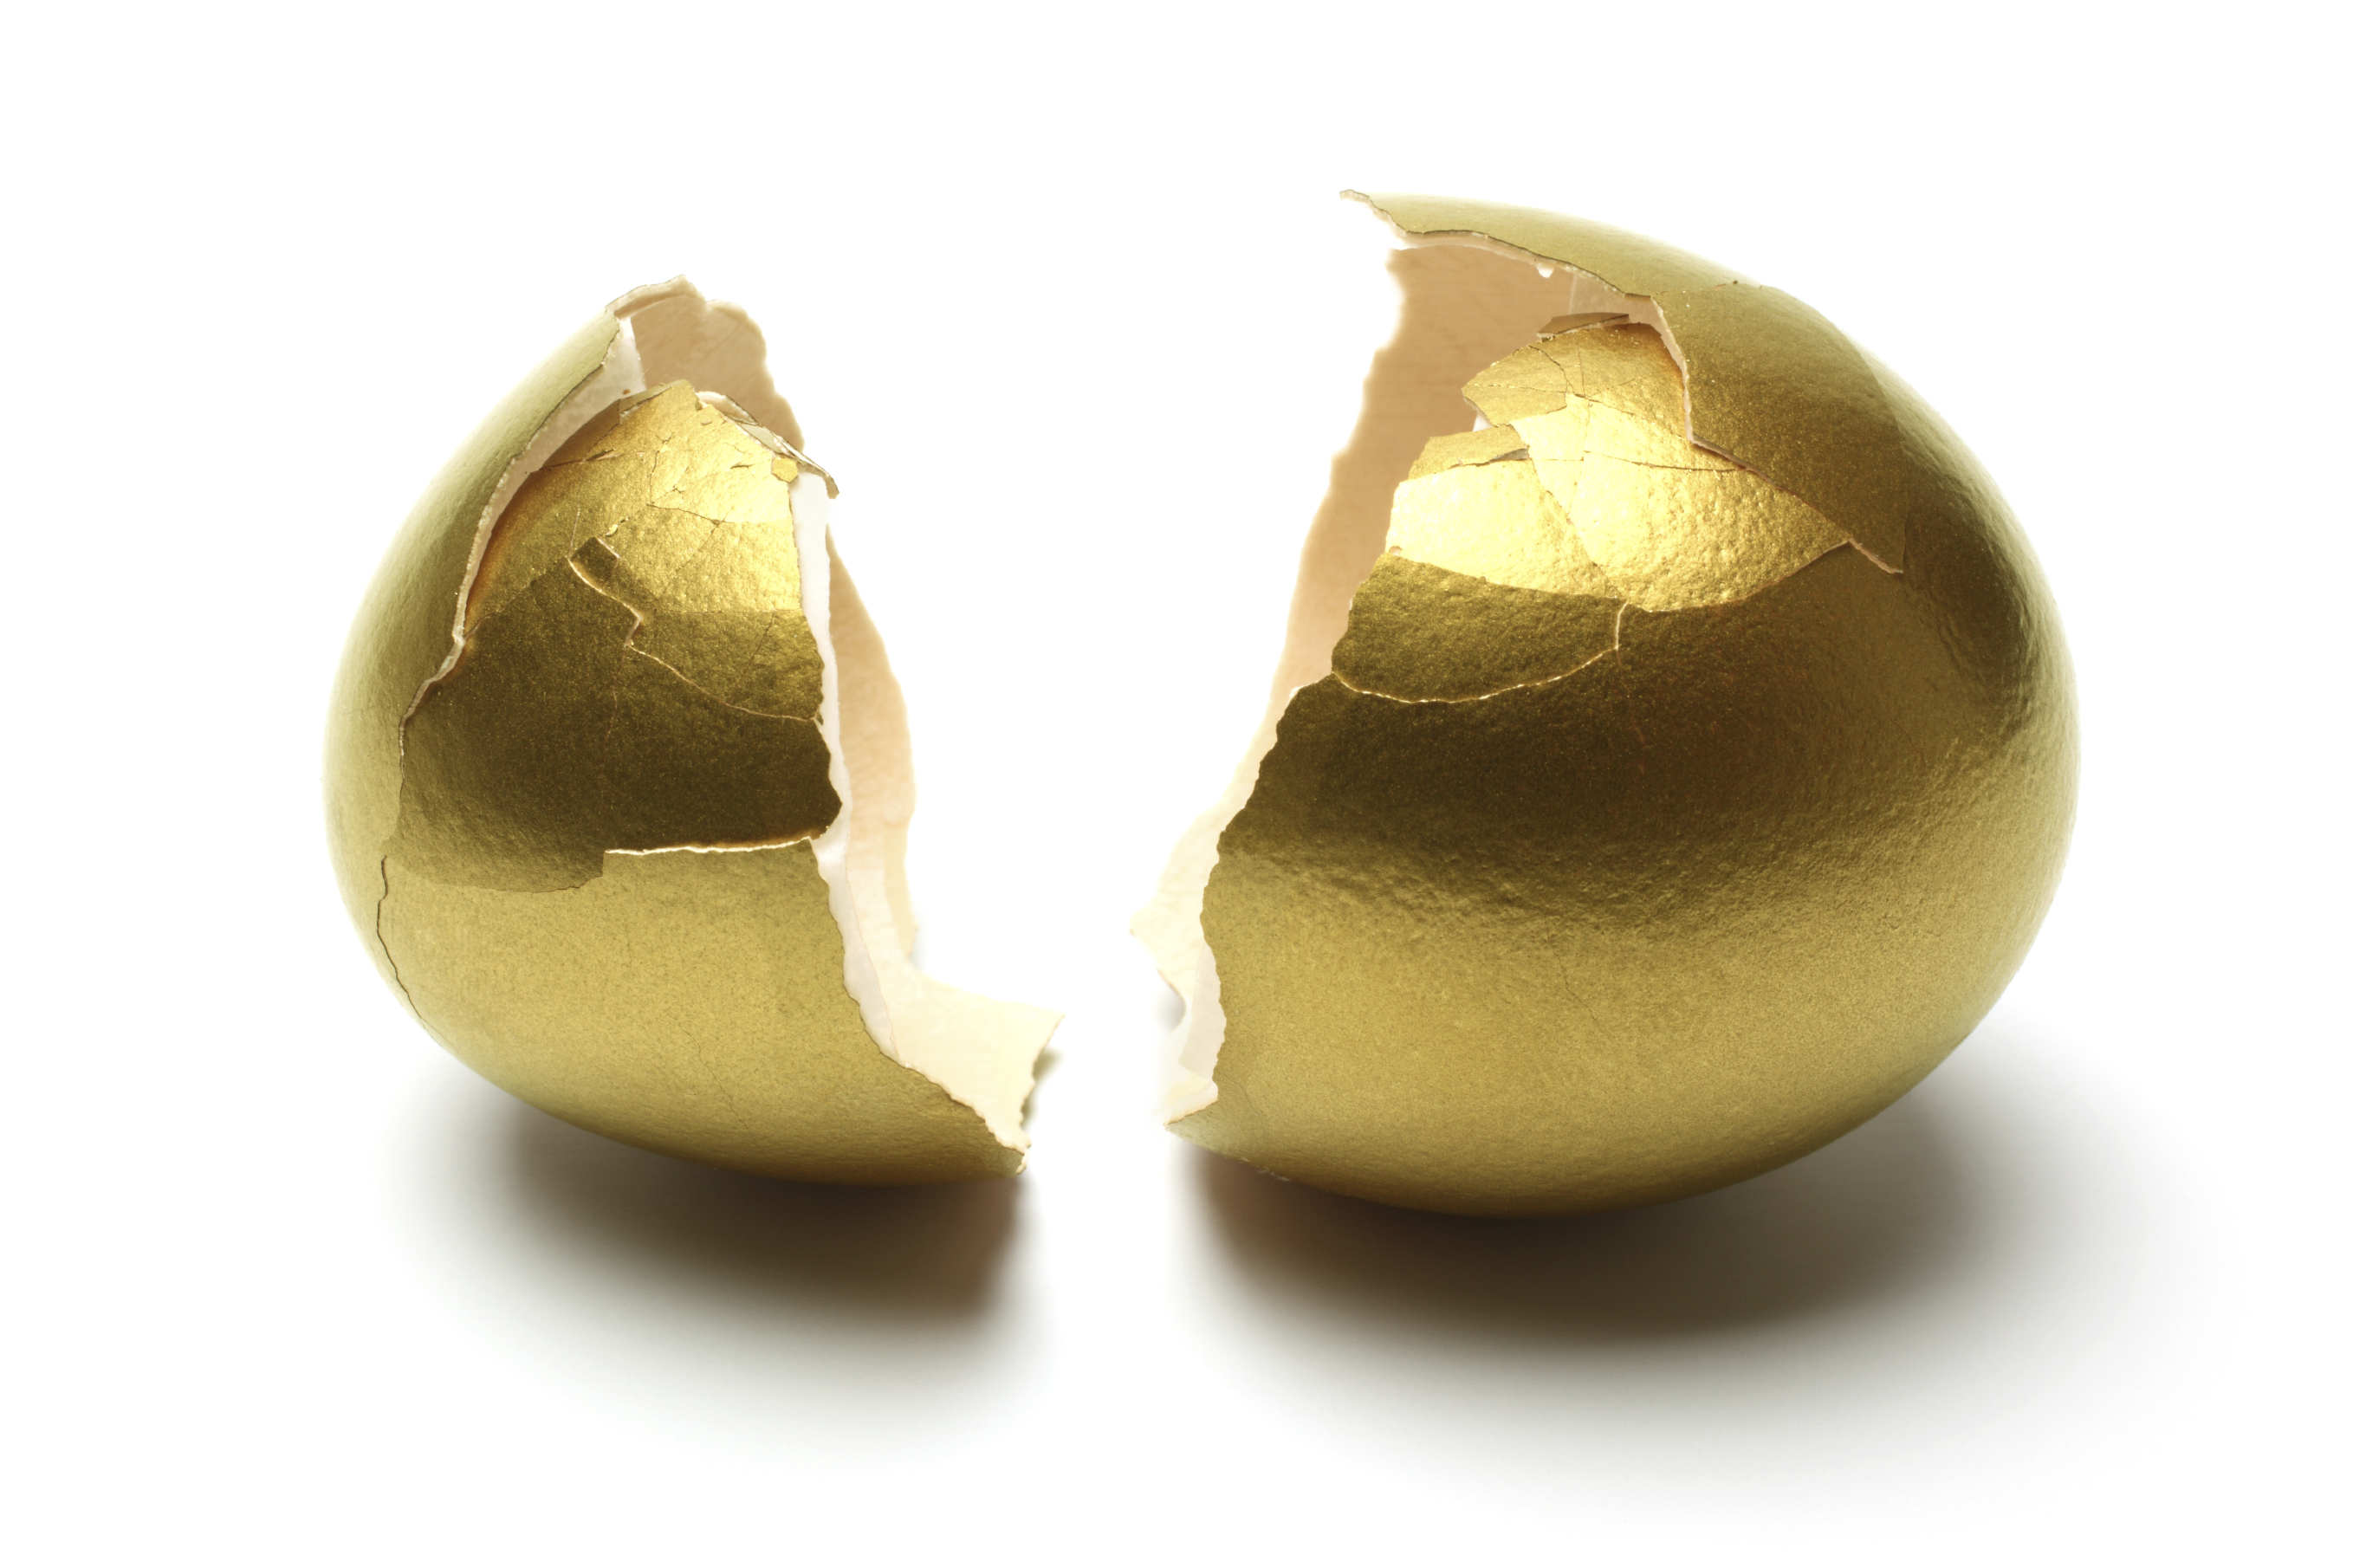 Mobile – The Golden Egg | The RMI ADVANTAGE